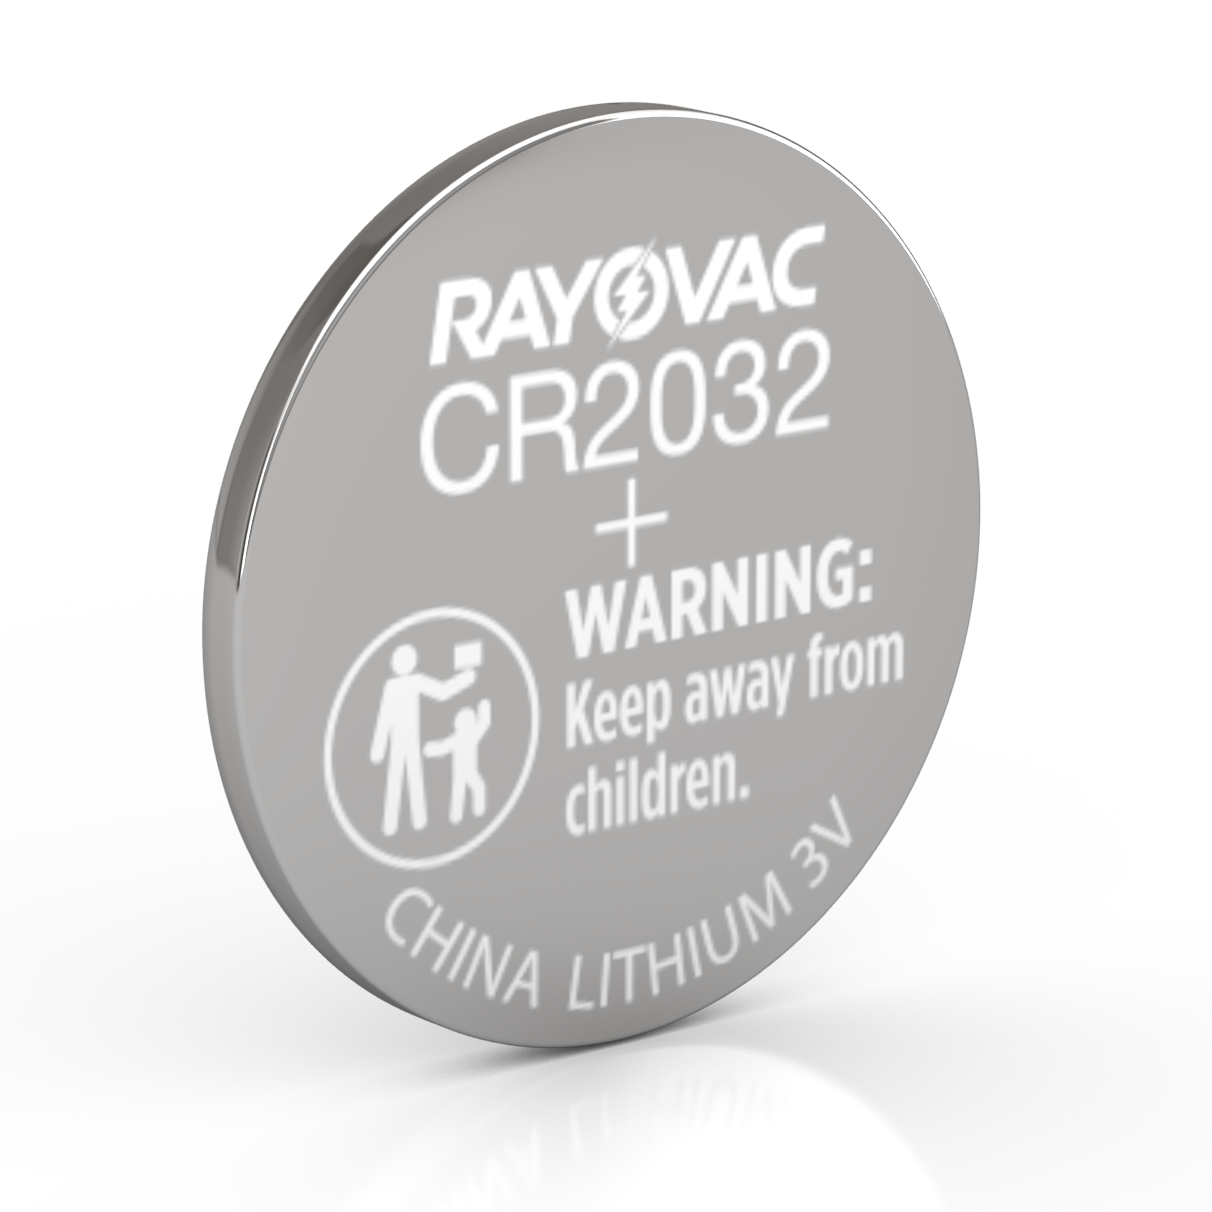 Pila Rayovac Lithium CR2032 3V